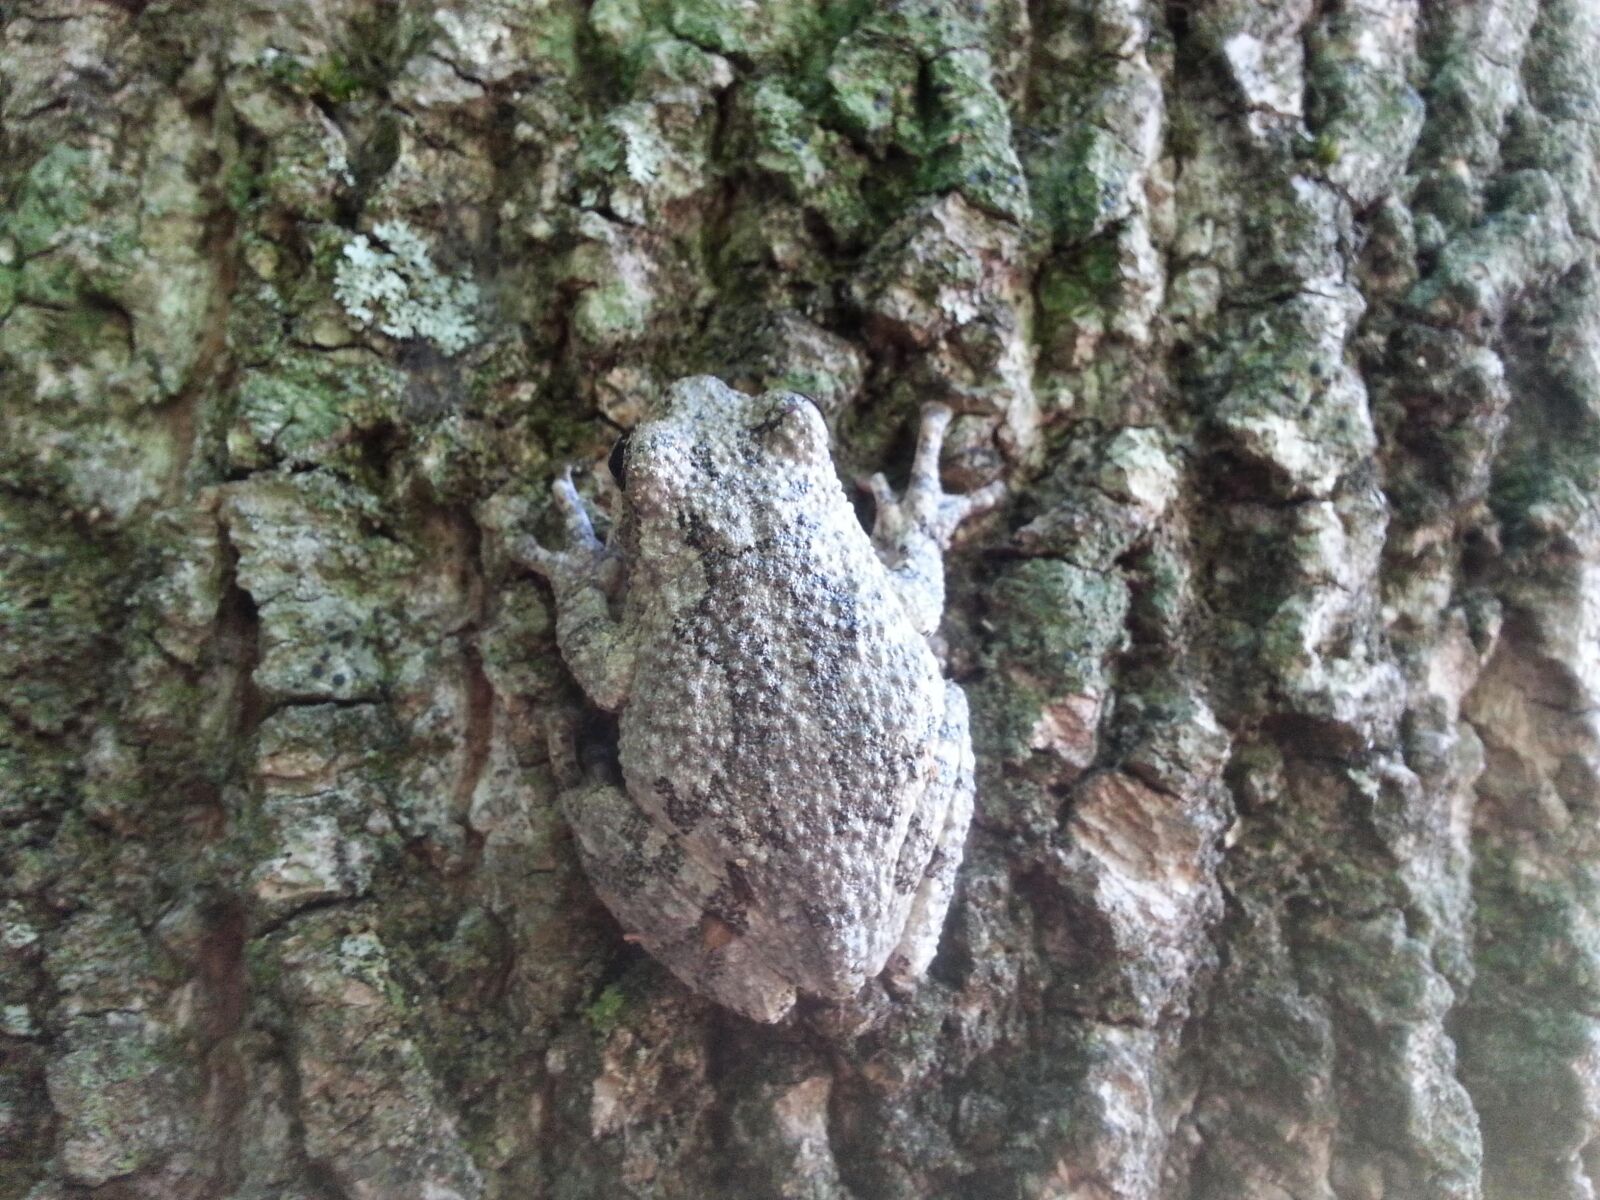 Samsung Galaxy S3 sample photo. Tree-frog, bark, nature photography